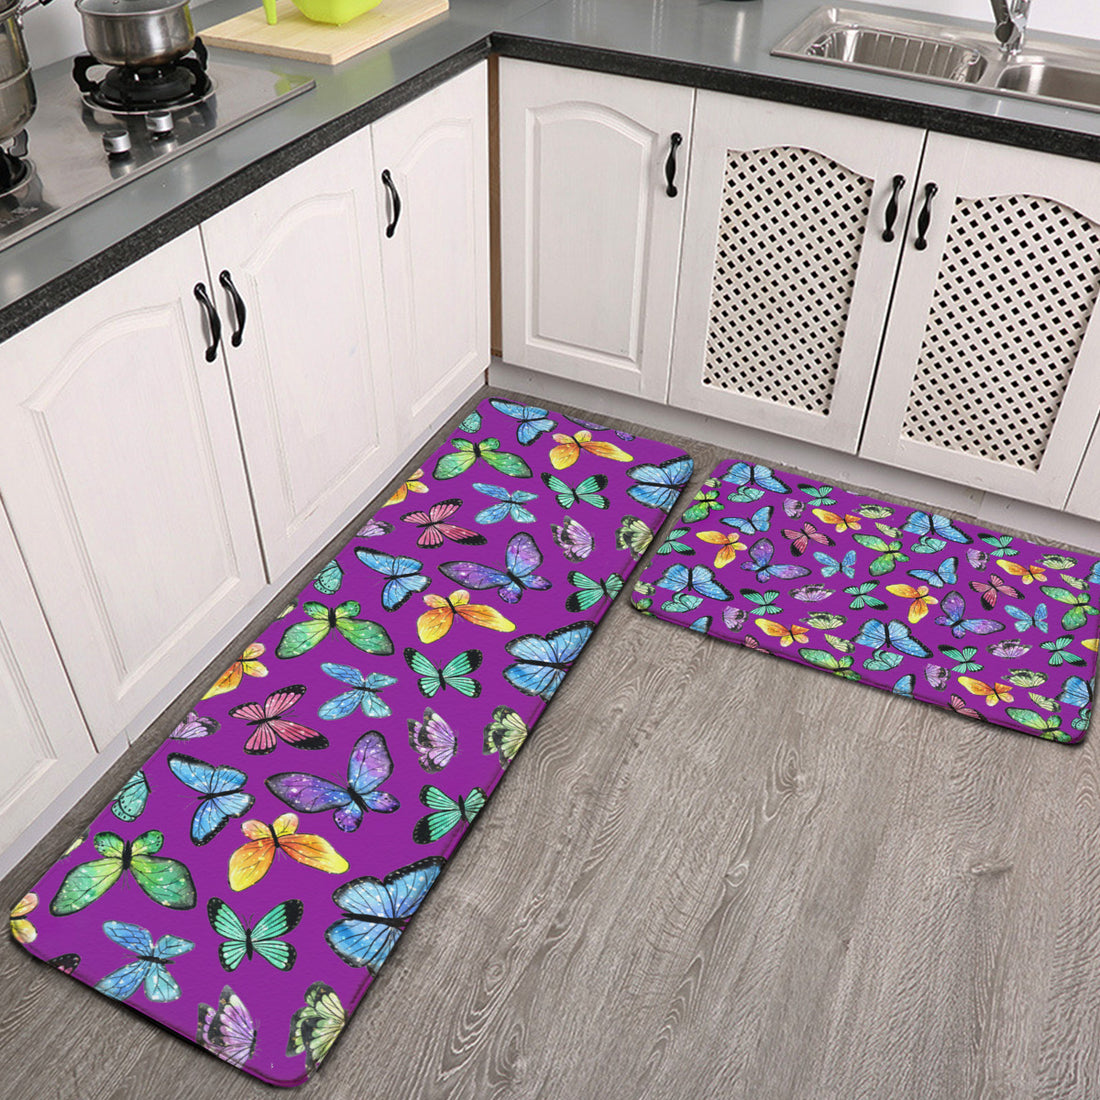 Two-piece L multifunctional kitchen mat butterflies | Flannel